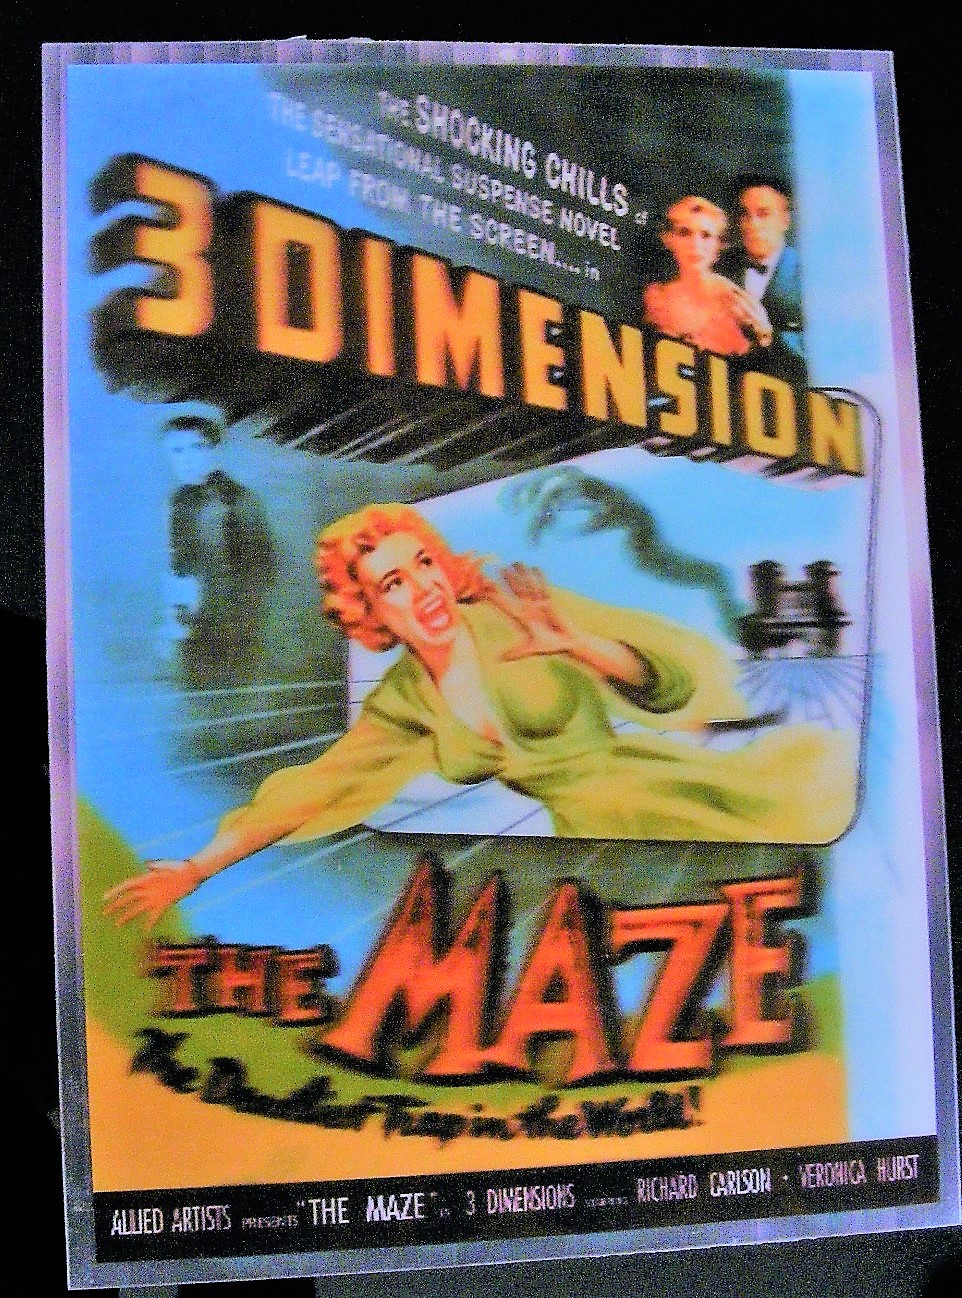 Three dimensional plastic poster